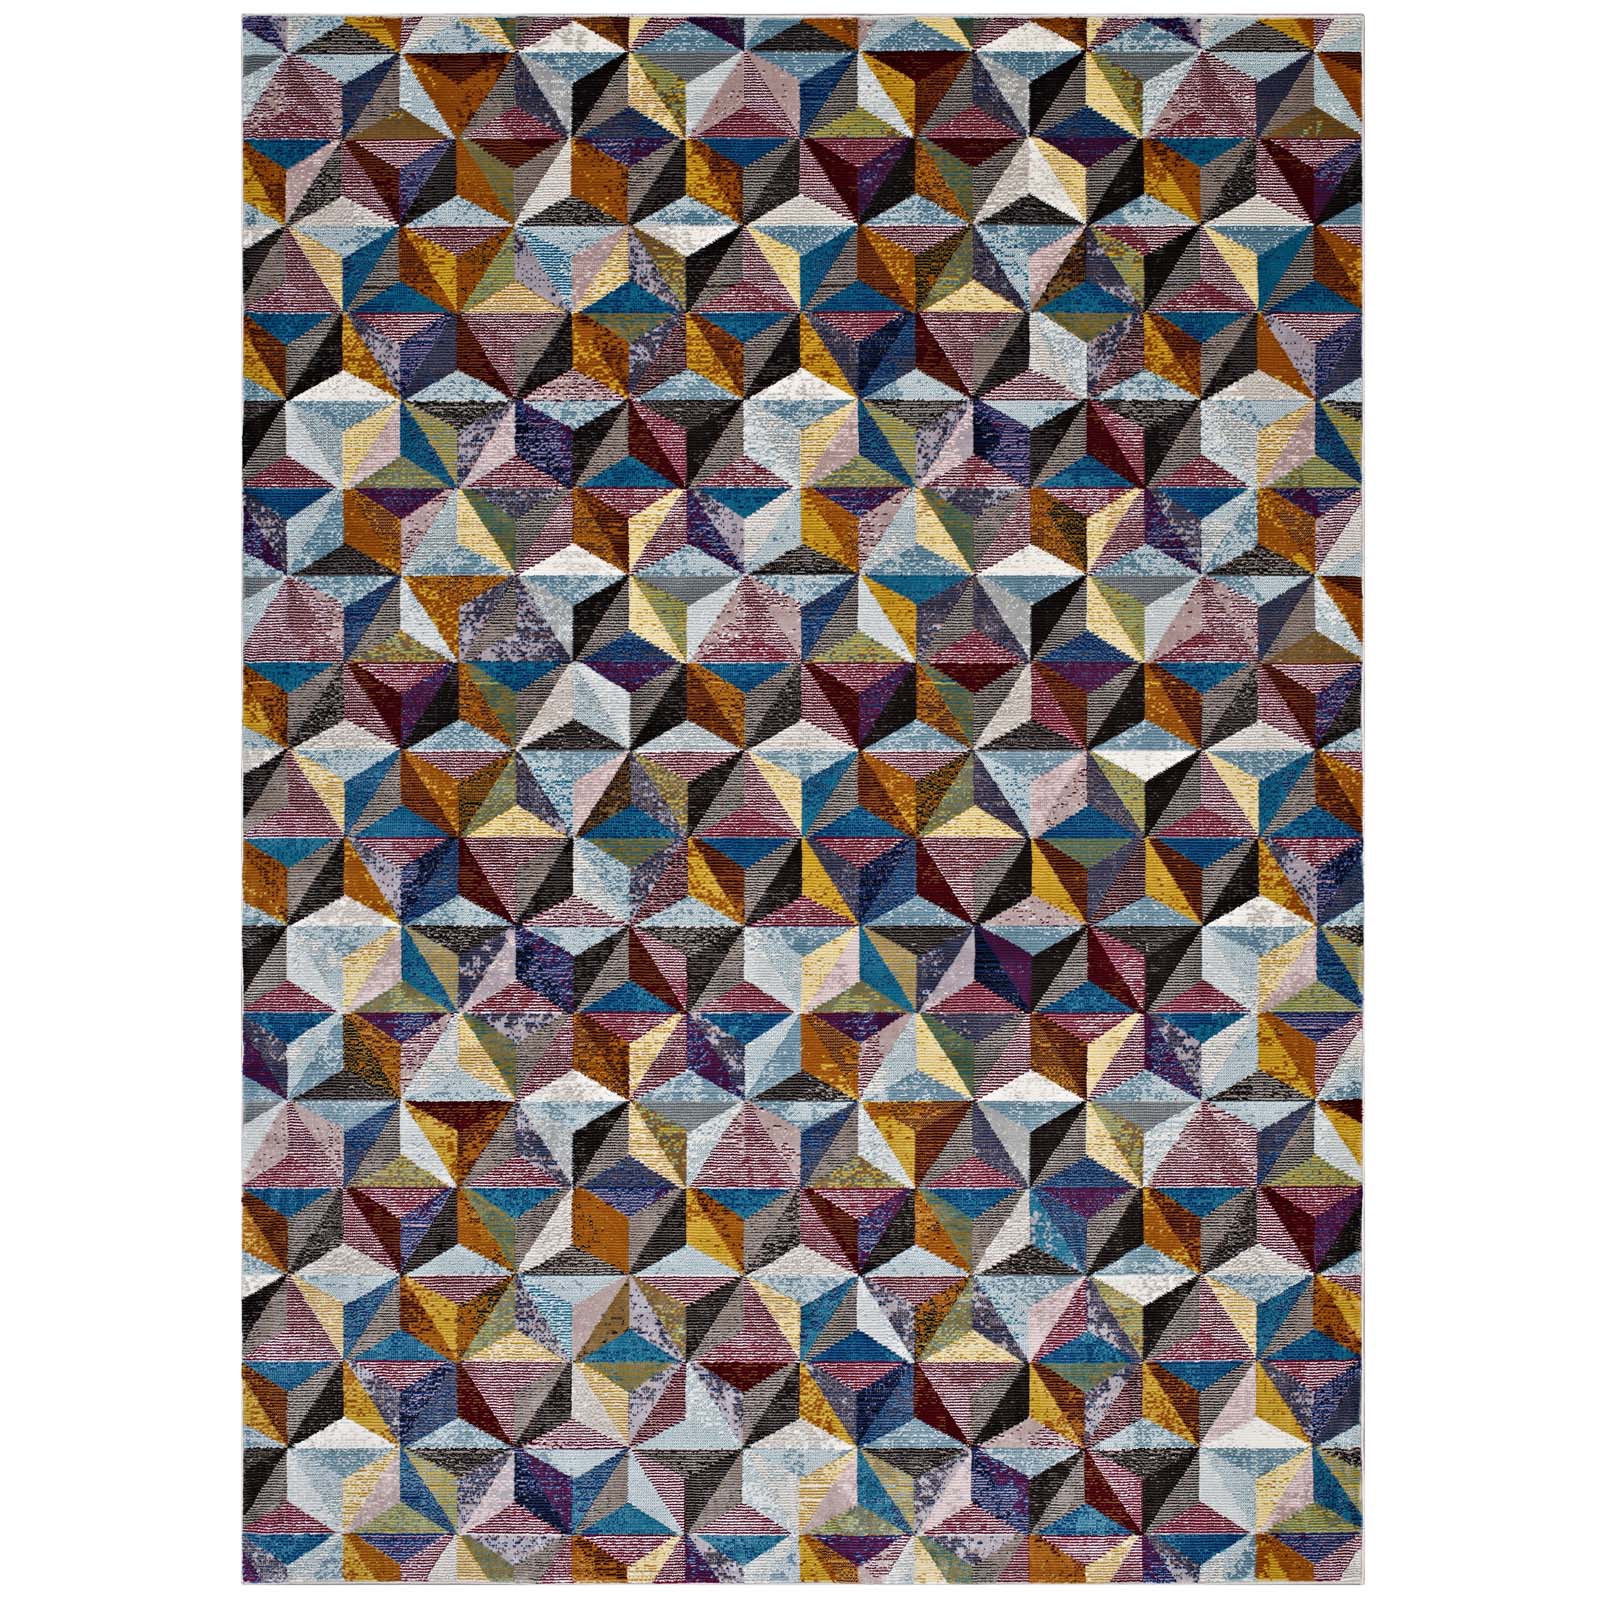 Arisa Geometric Hexagon Mosaic Area Rug